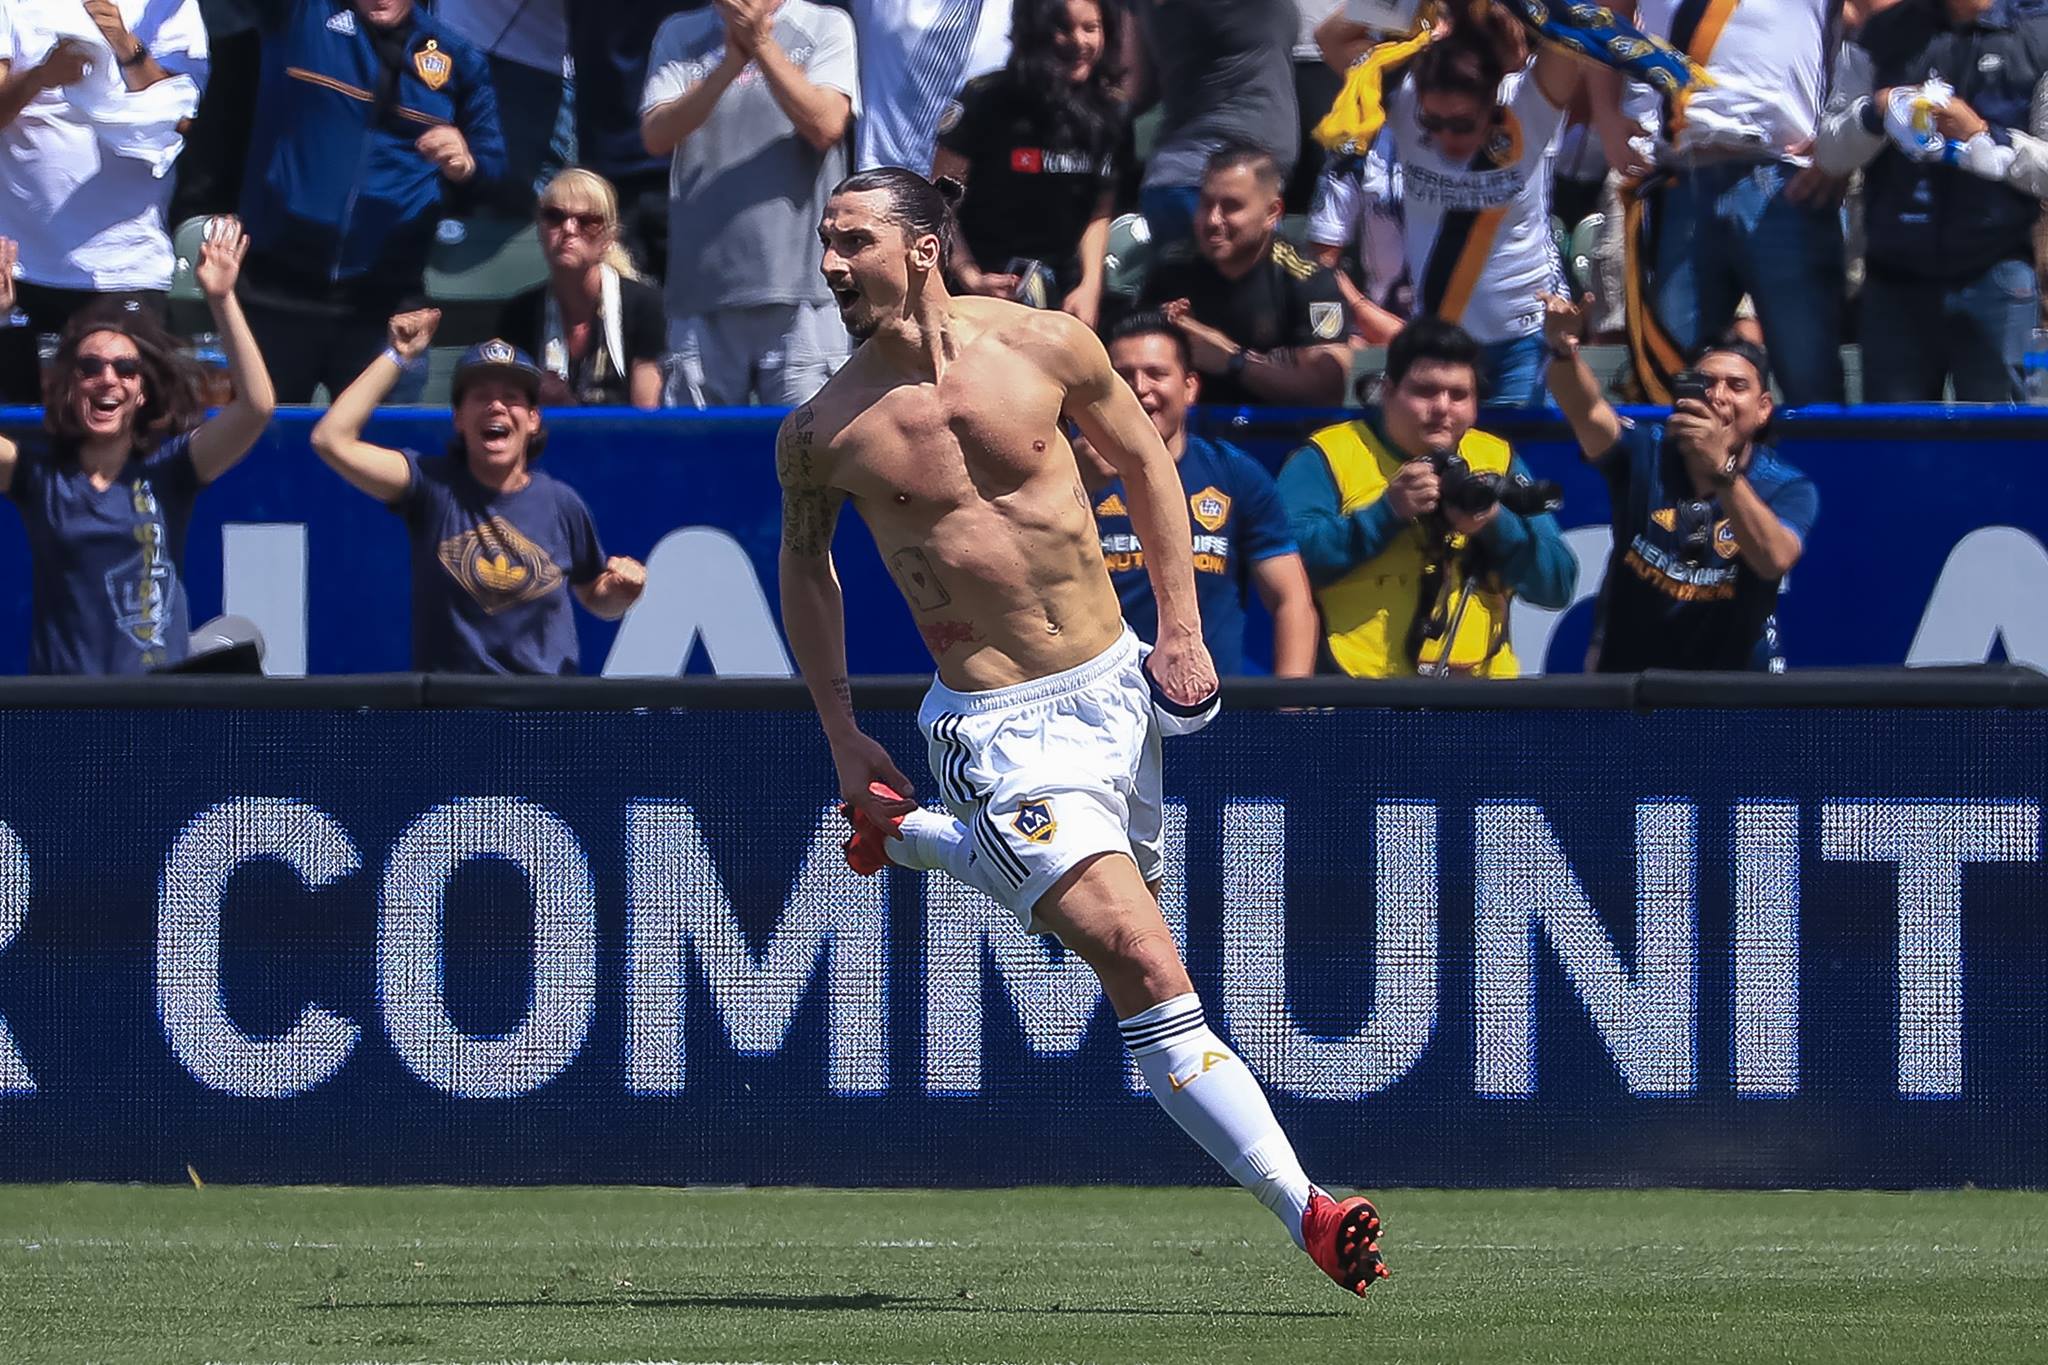 Zlatan celebrates after scoring goal for LA Galaxy